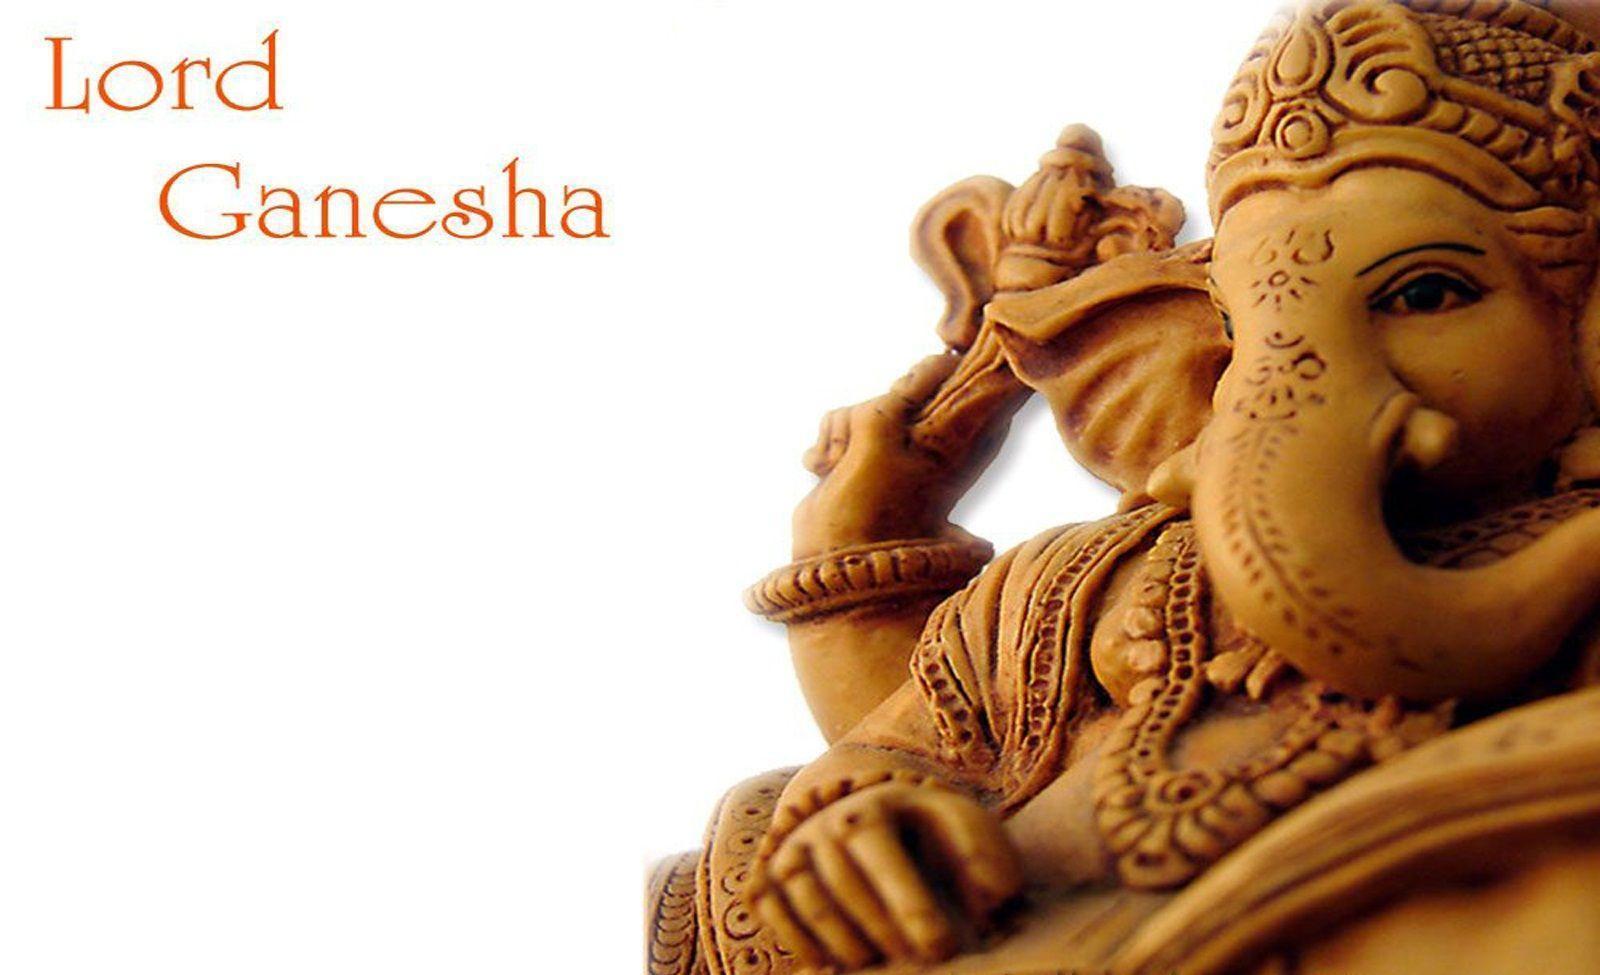 Lord Ganpati / Ganesh Image HD 3D Picture, Ganesh Wallpaper